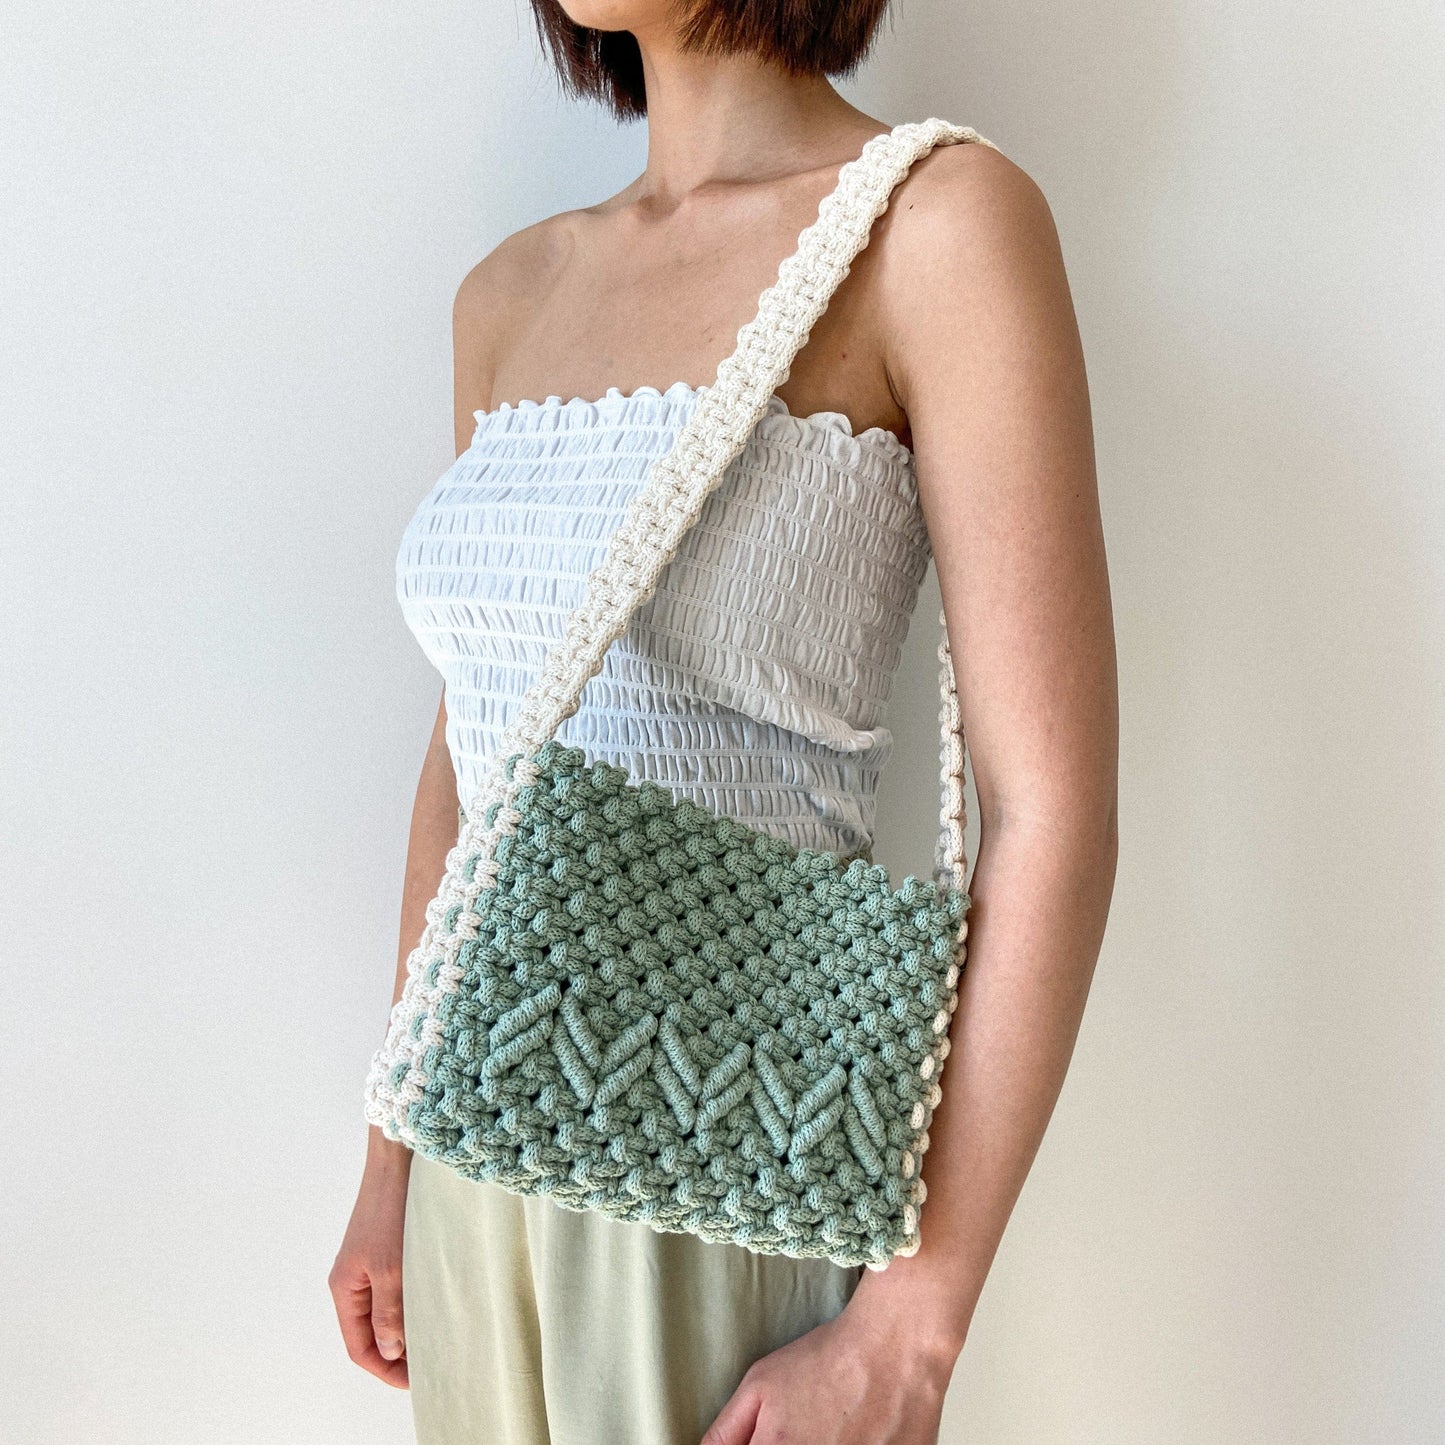 Flora Street Atelier Handmade Macrame Bag "Four Seasons" Macrame Shoulder Bag